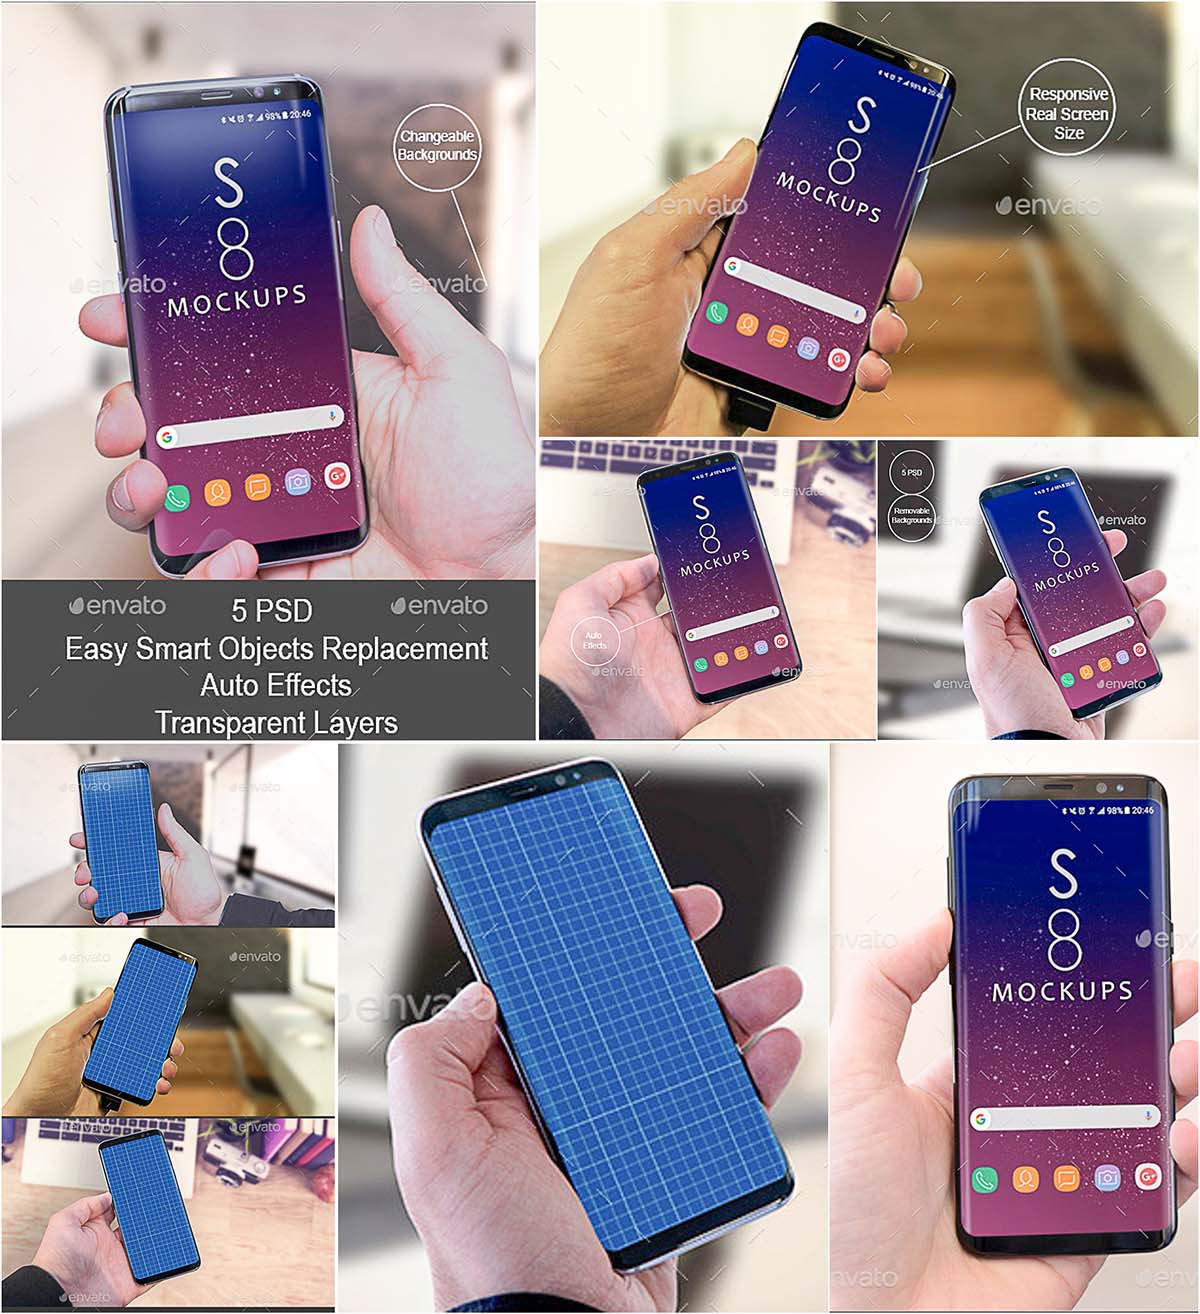 Samsung galaxy s8 mockup ui showcase